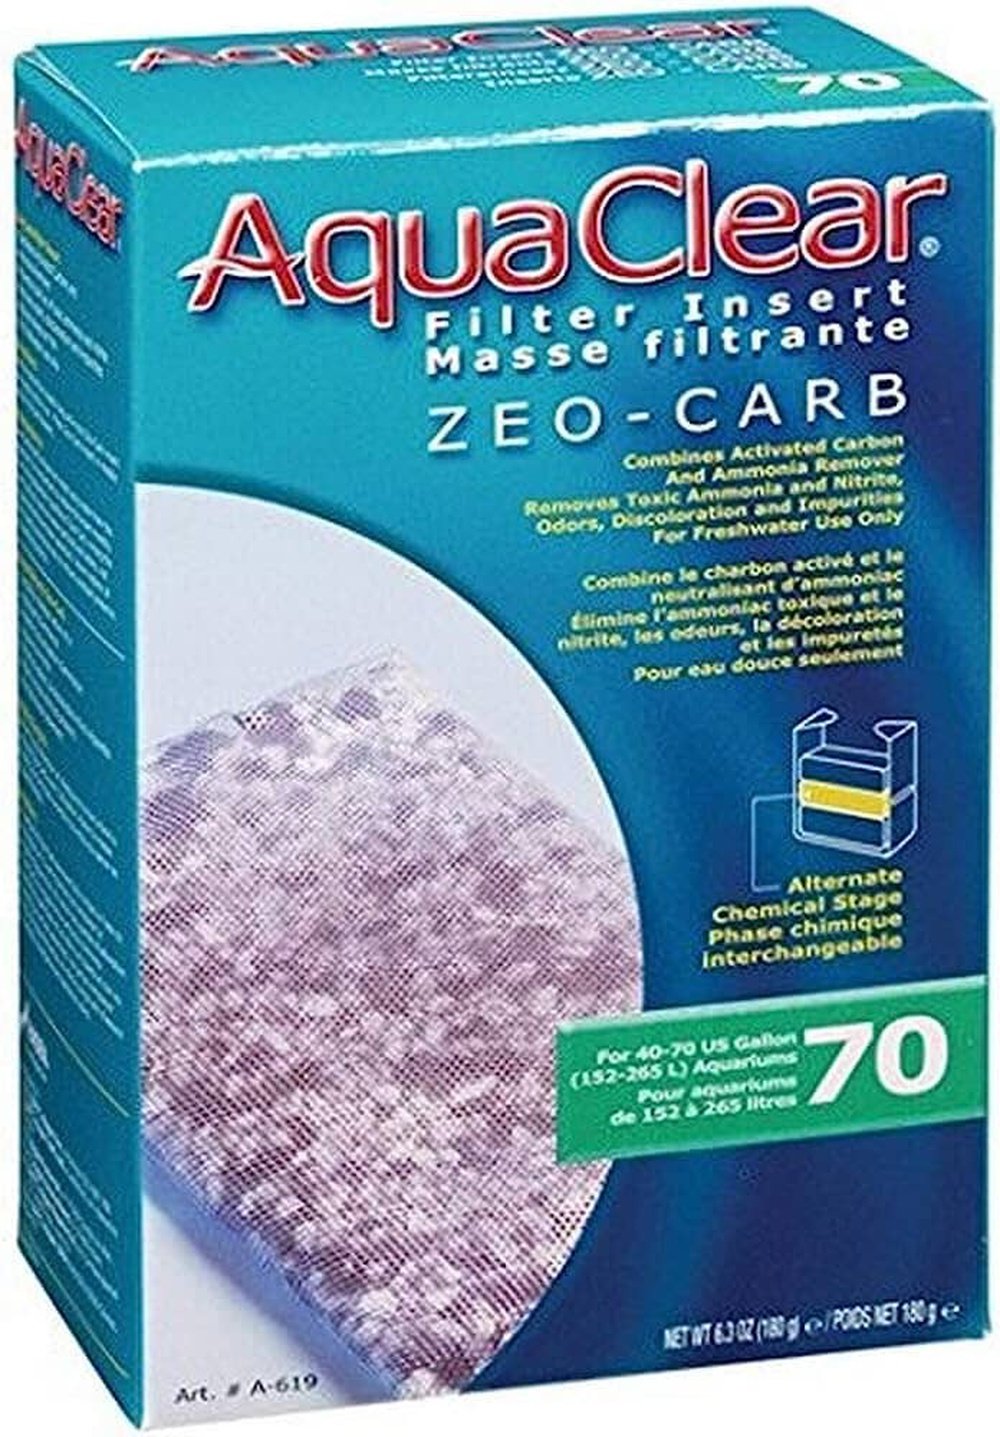 AquaClear Filter Insert Zeo-Carb 70gal